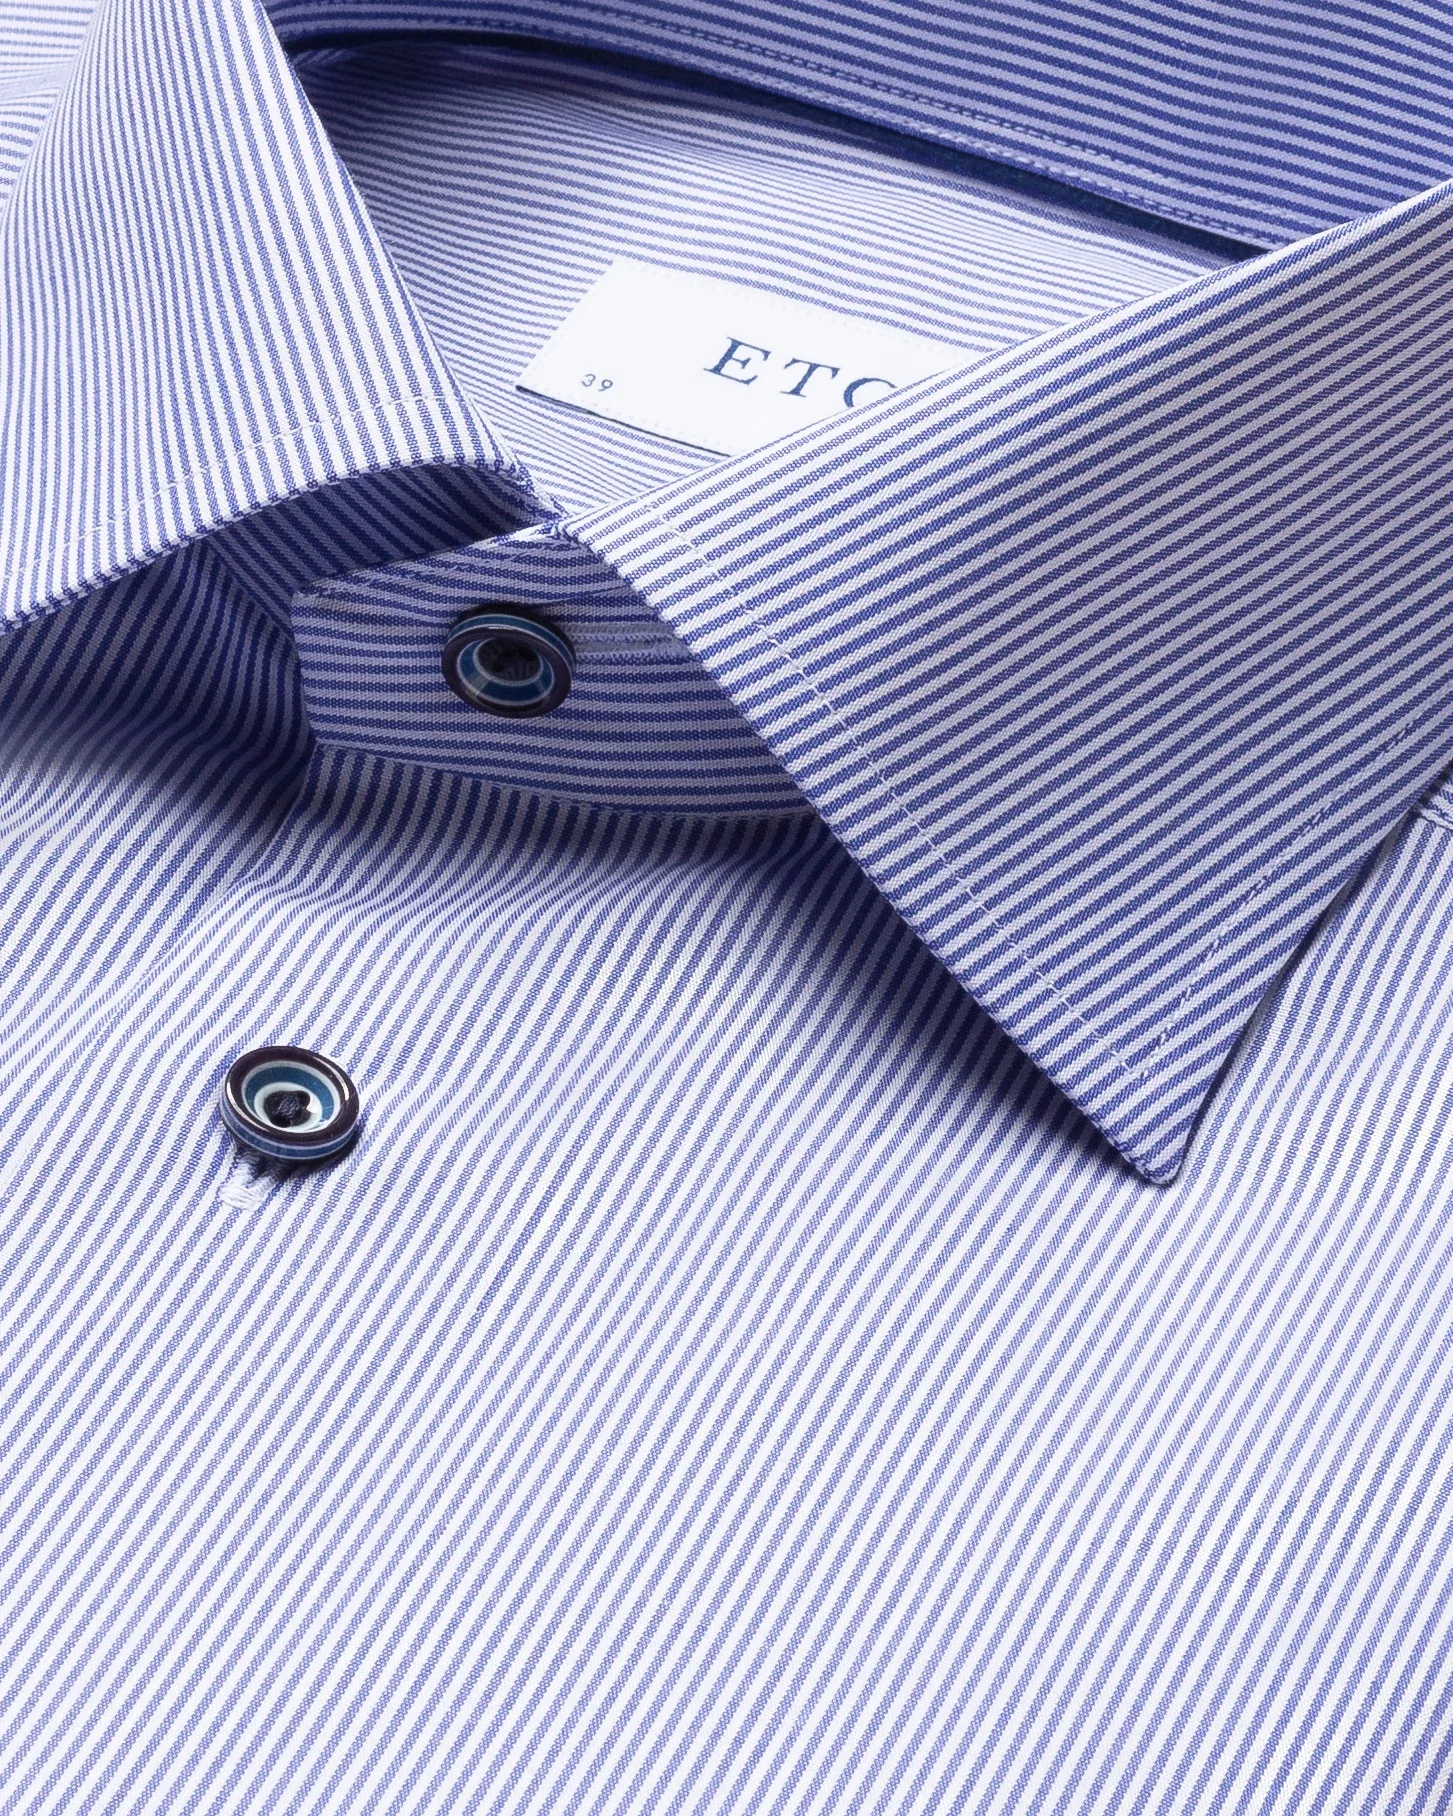 Eton - navy striped poplin shirt navy buttons